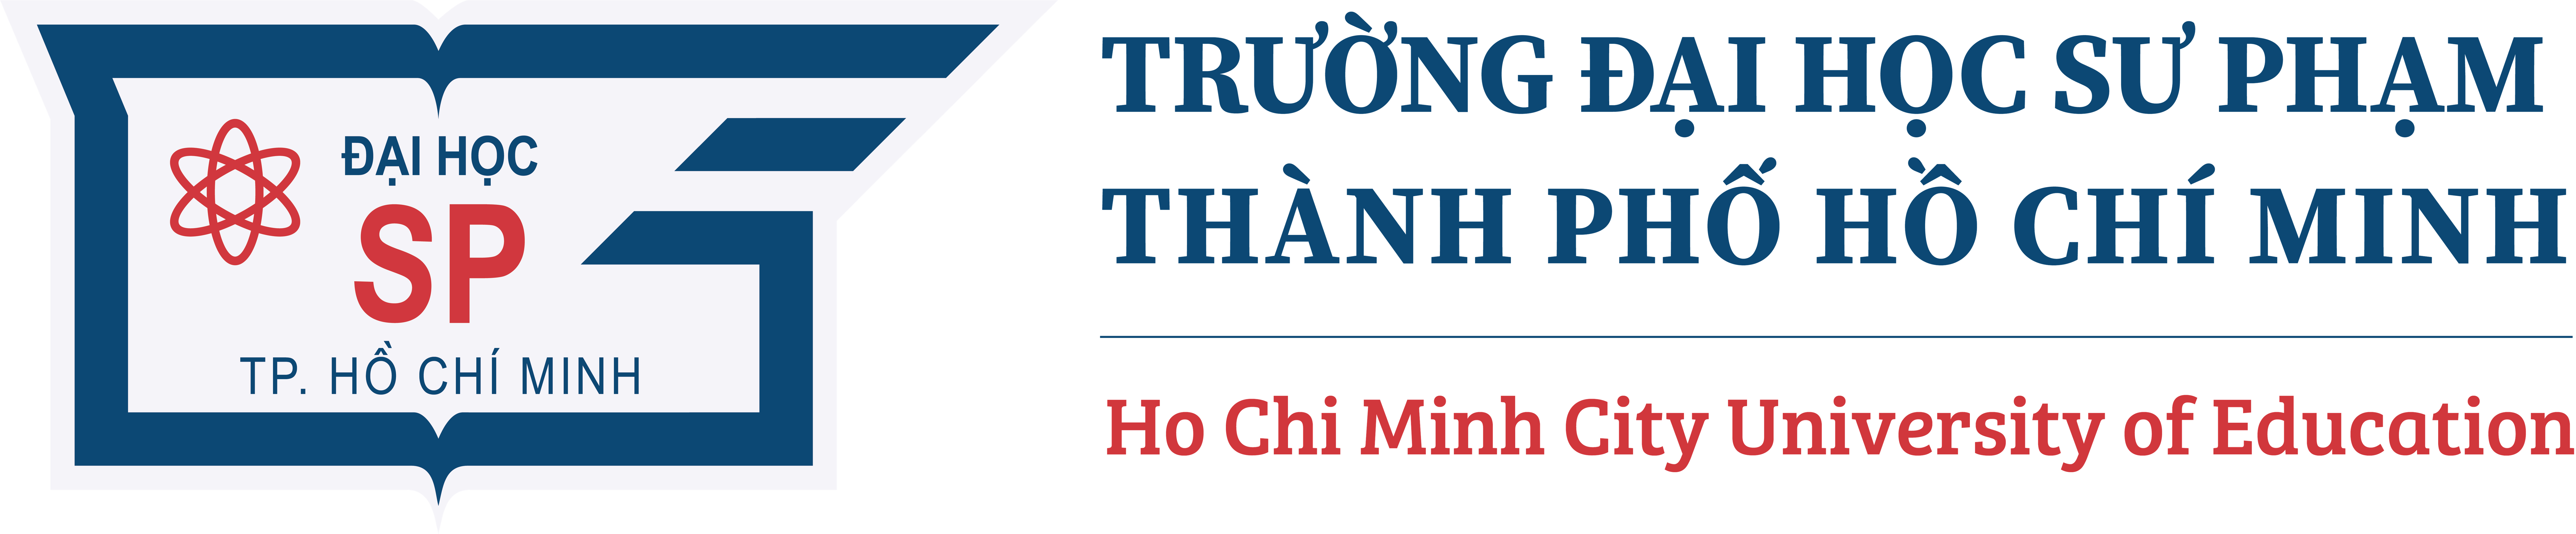 HCMC University of Education